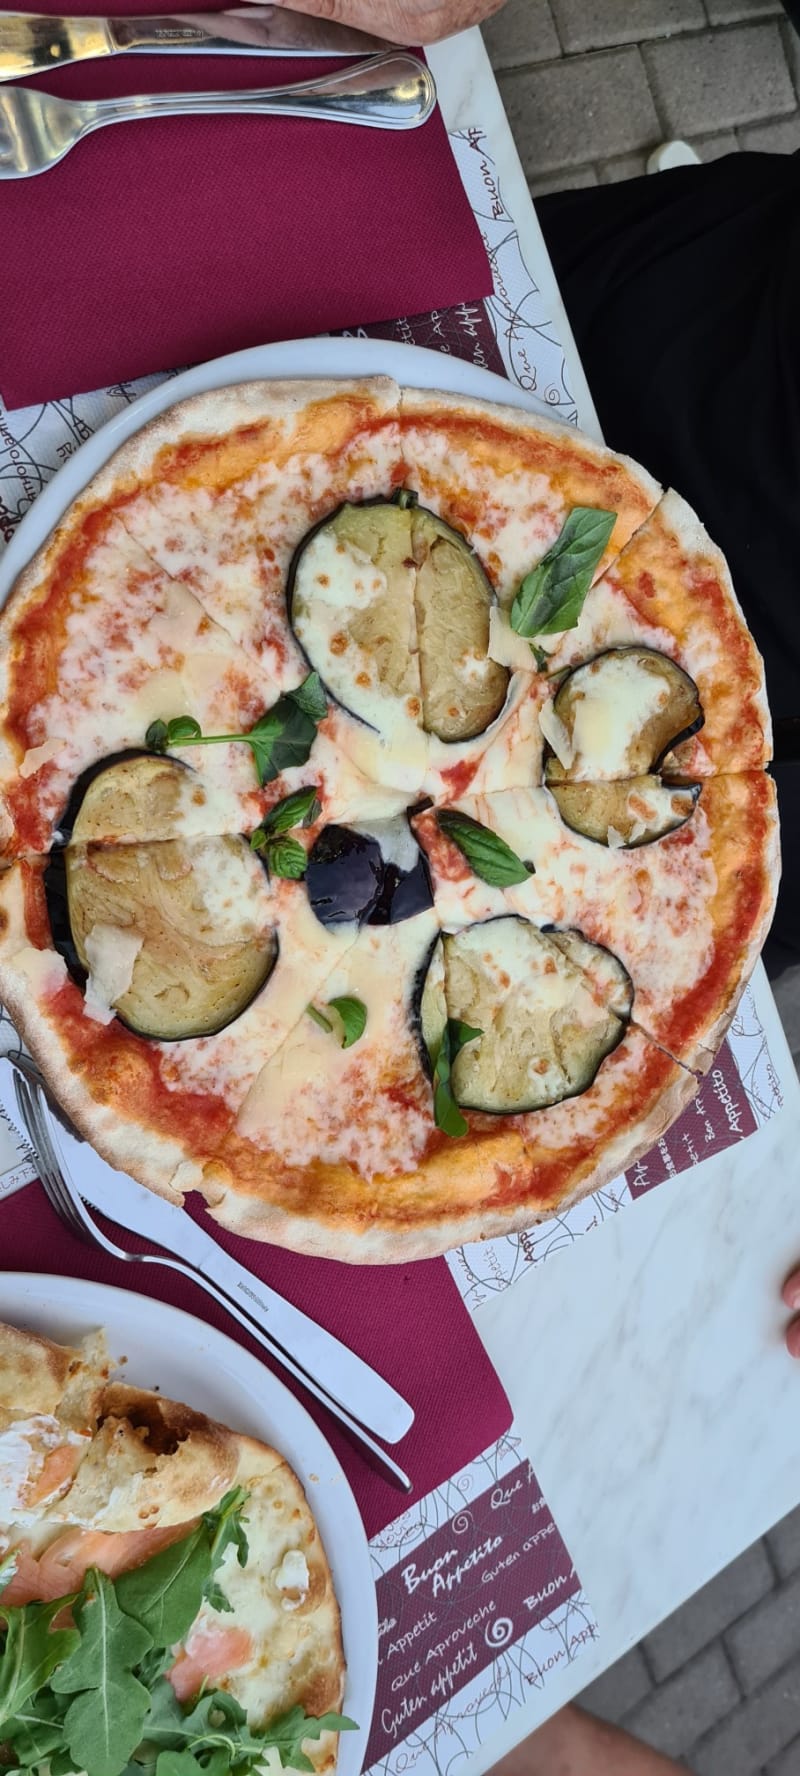 Sprint pizza, Rome